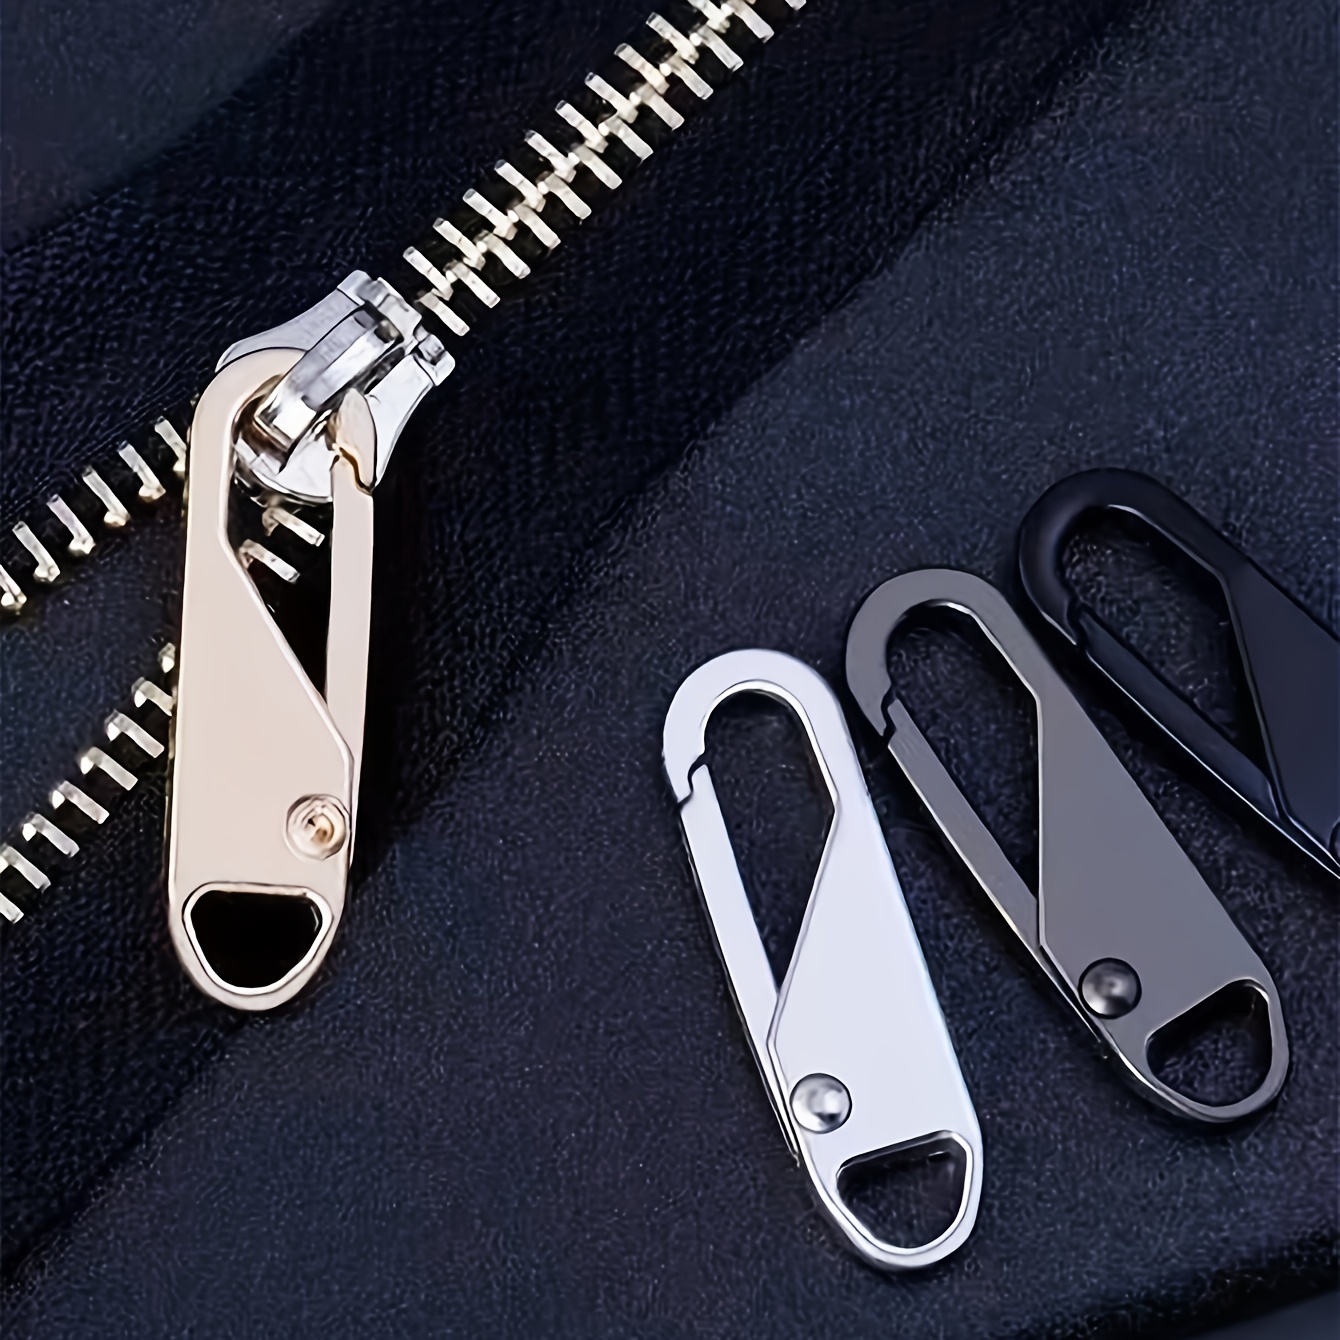 6pcs/Set Universal Zipper Repair Kit Zipper Replacement Zipper Pull Kit For  Clothing Jackets Purses Luggage Backpacks Tents Sleeping Bag 